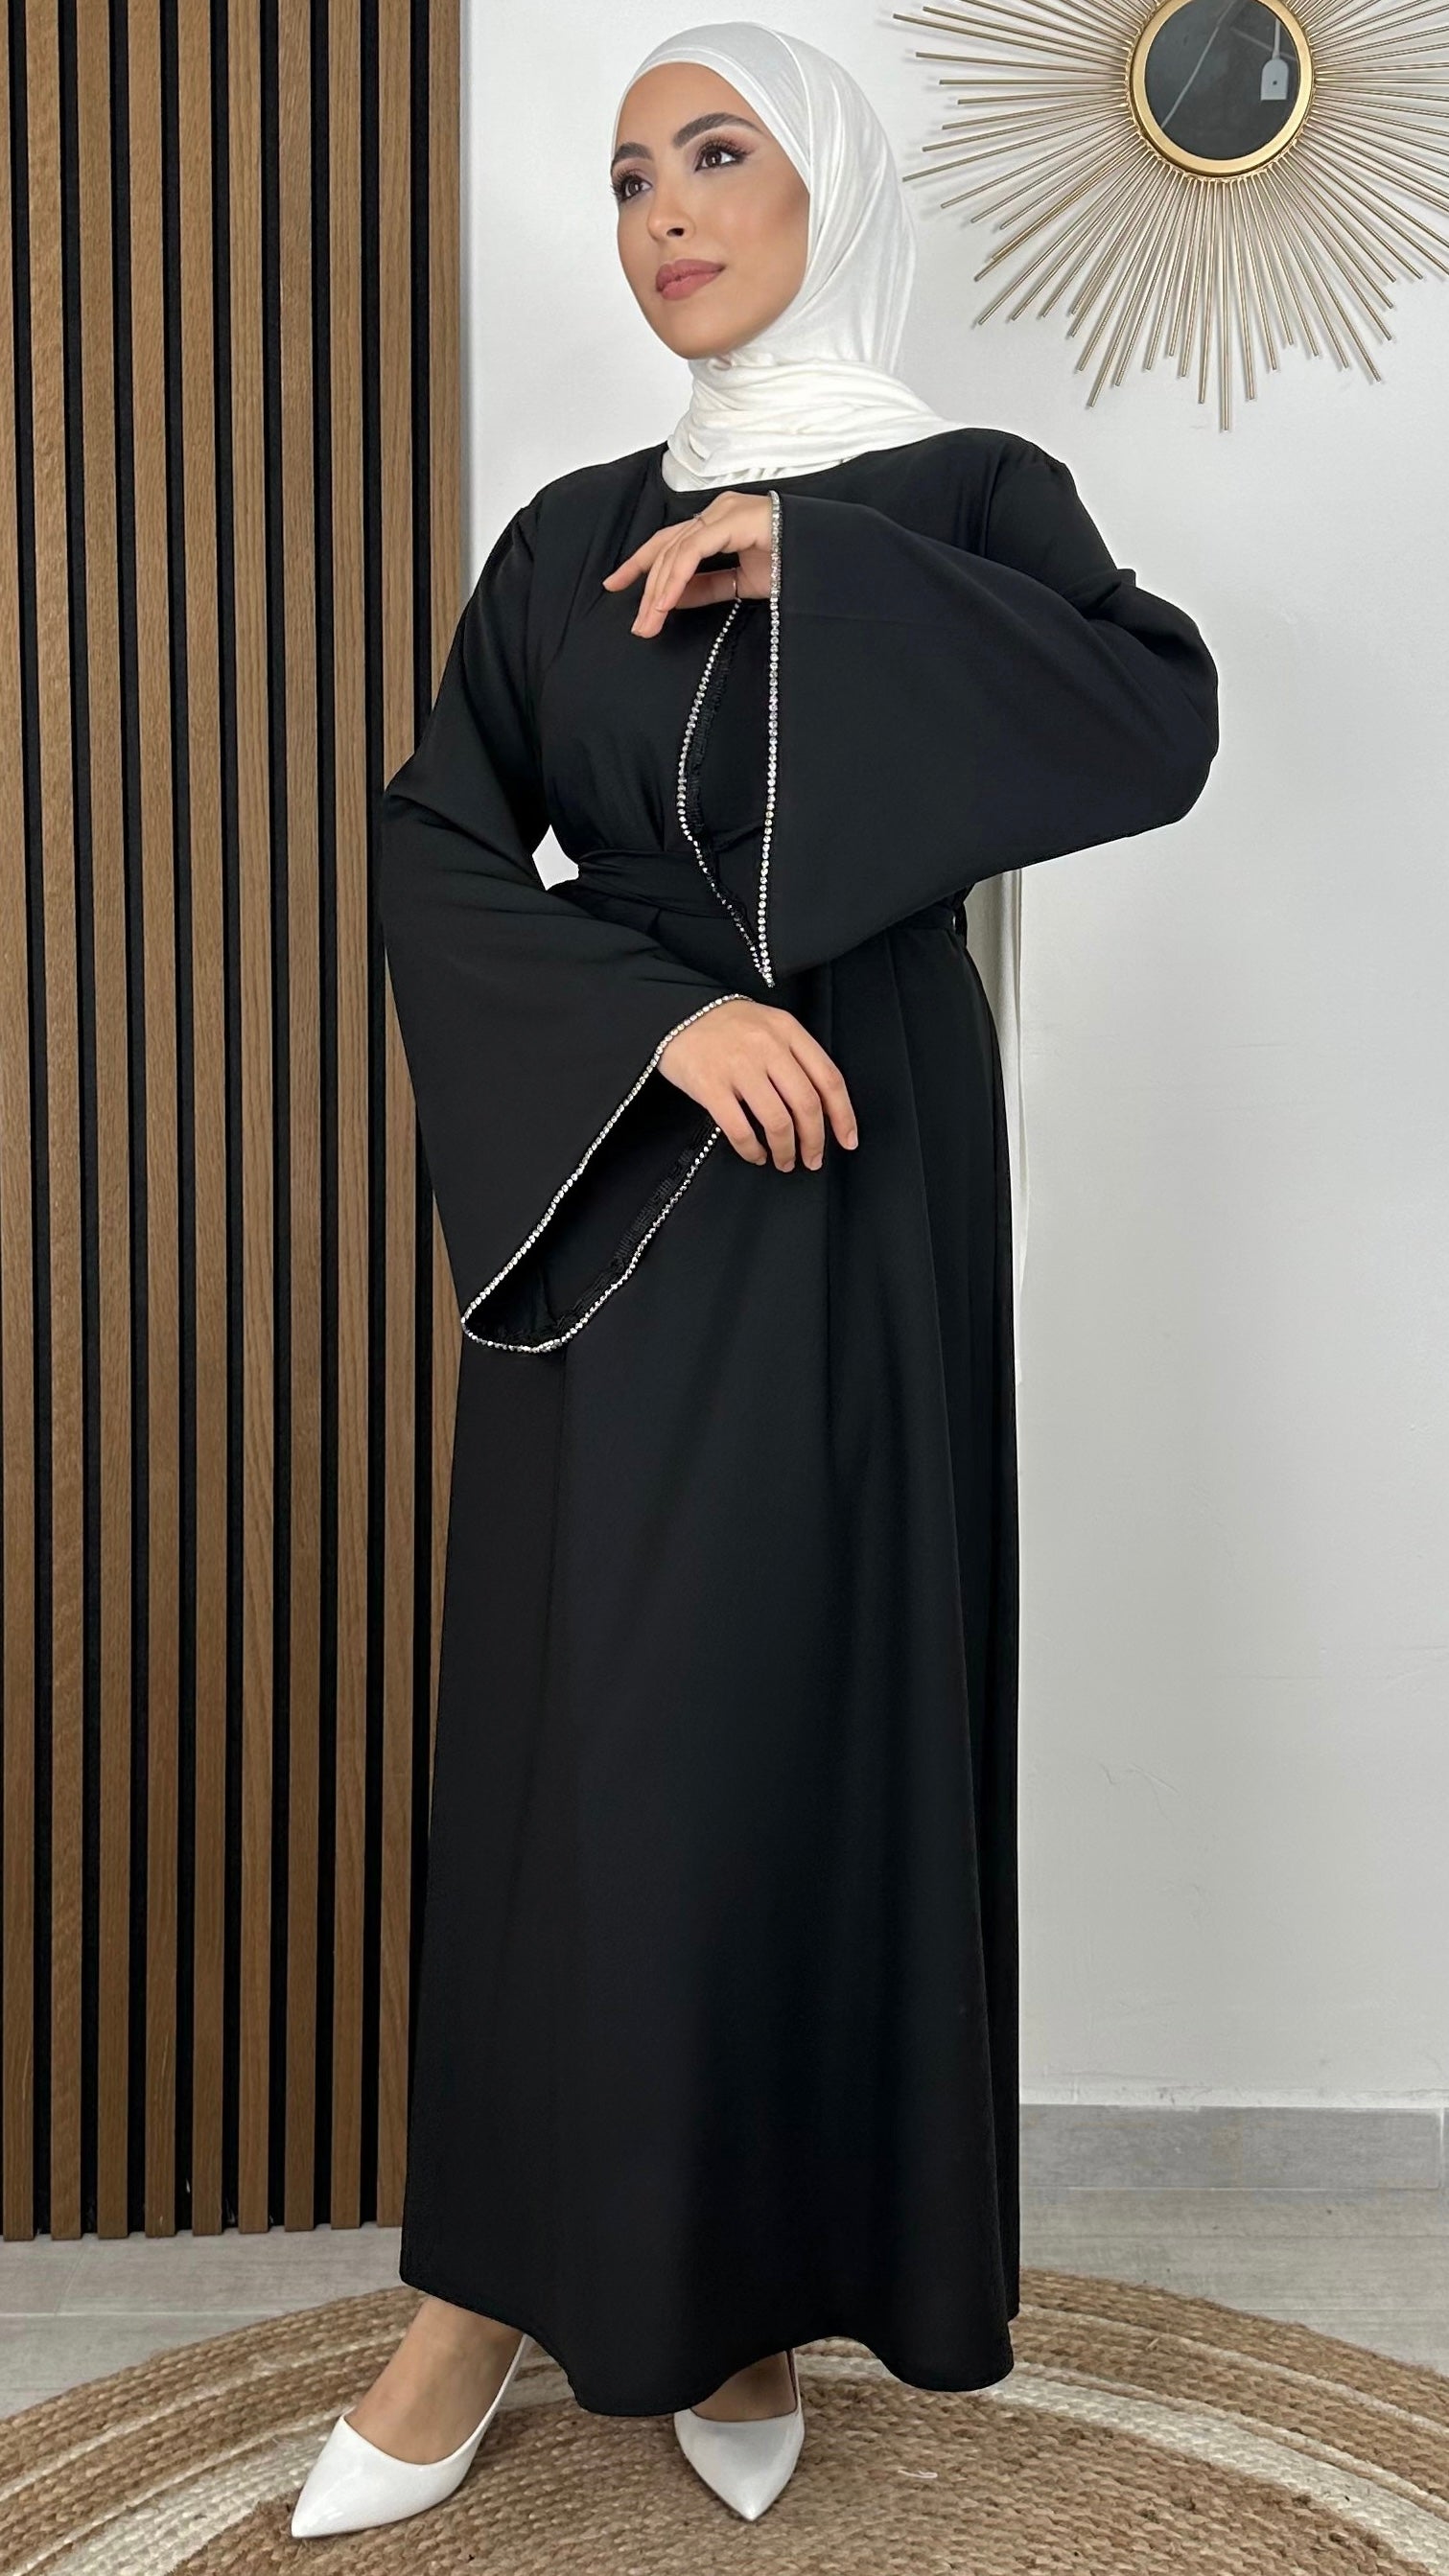 Abaya Diamond - Hijab Paradise - abaya lunga -  maniche larghe - perle sul bordo manica - jersey bianco - tacchi bianchi  - cinturino in vita